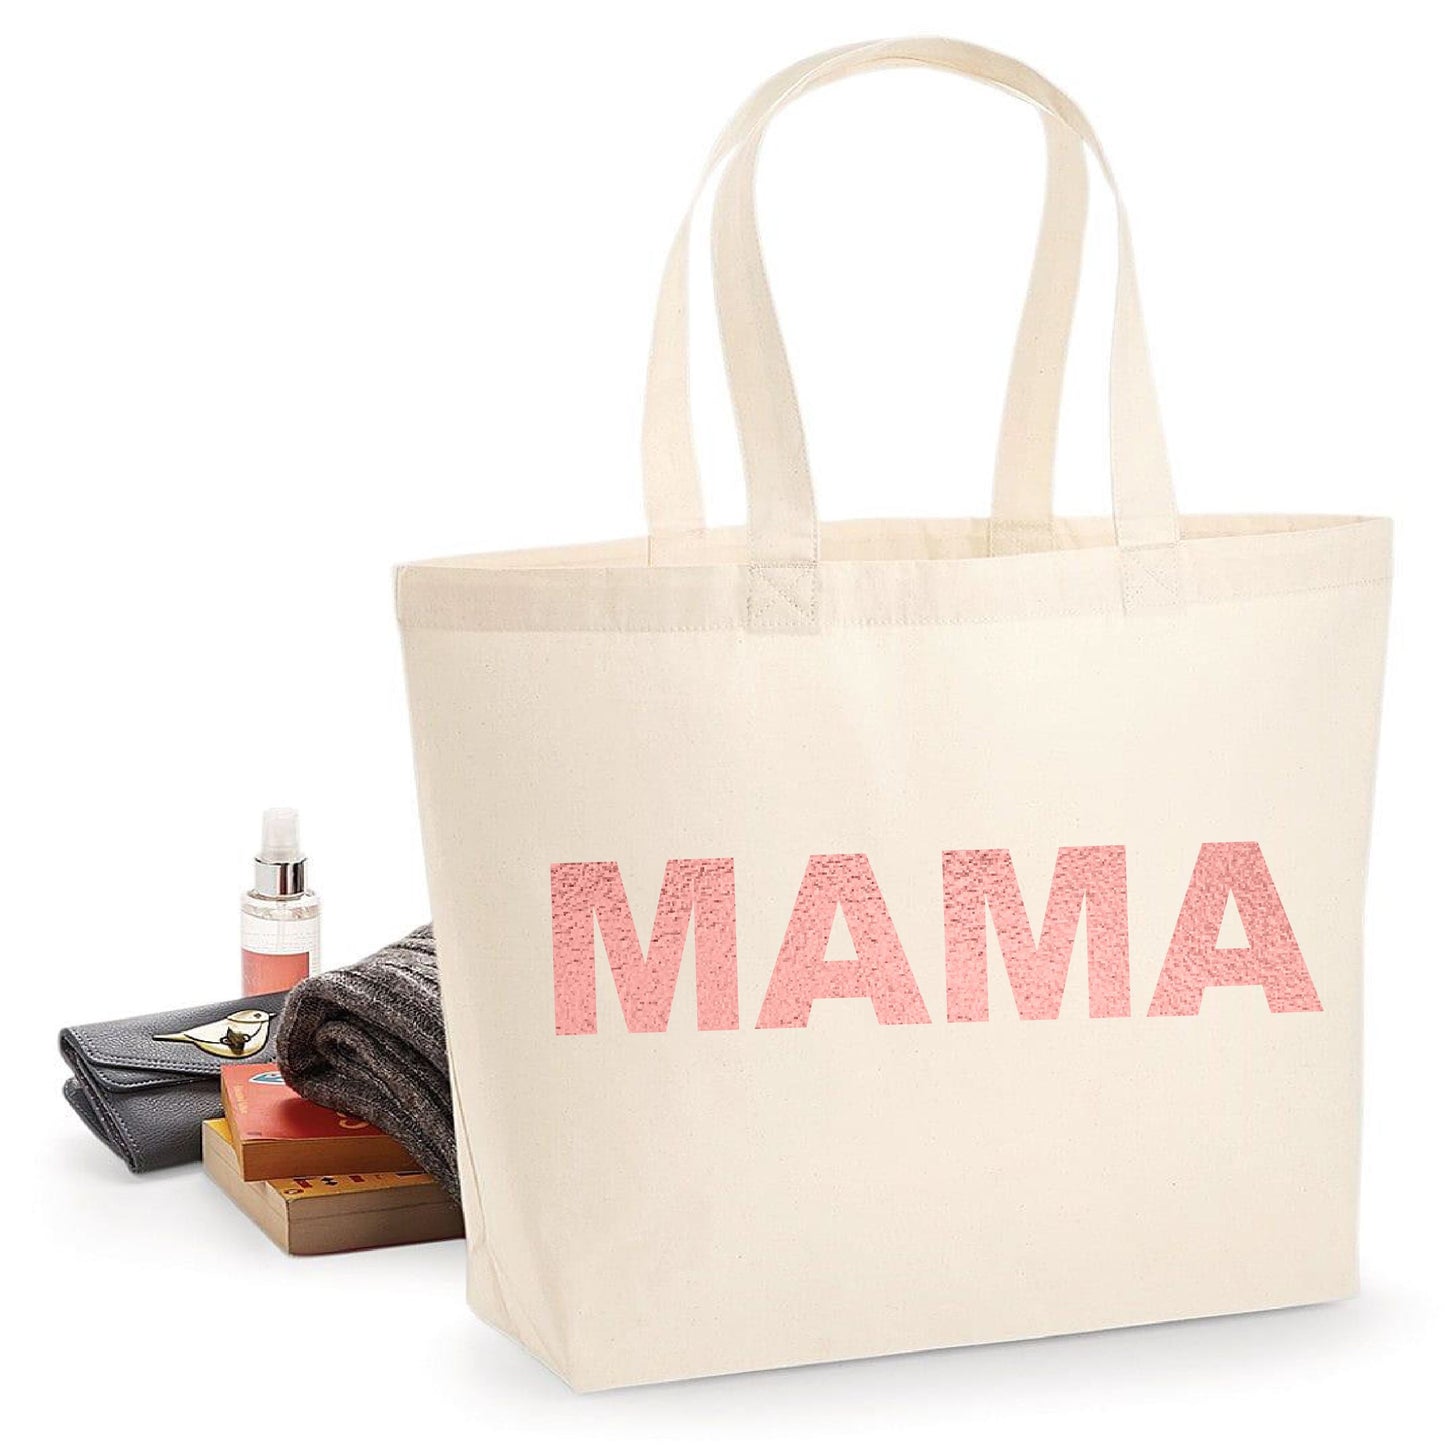 MAMA Rose Gold Text Tote Bag